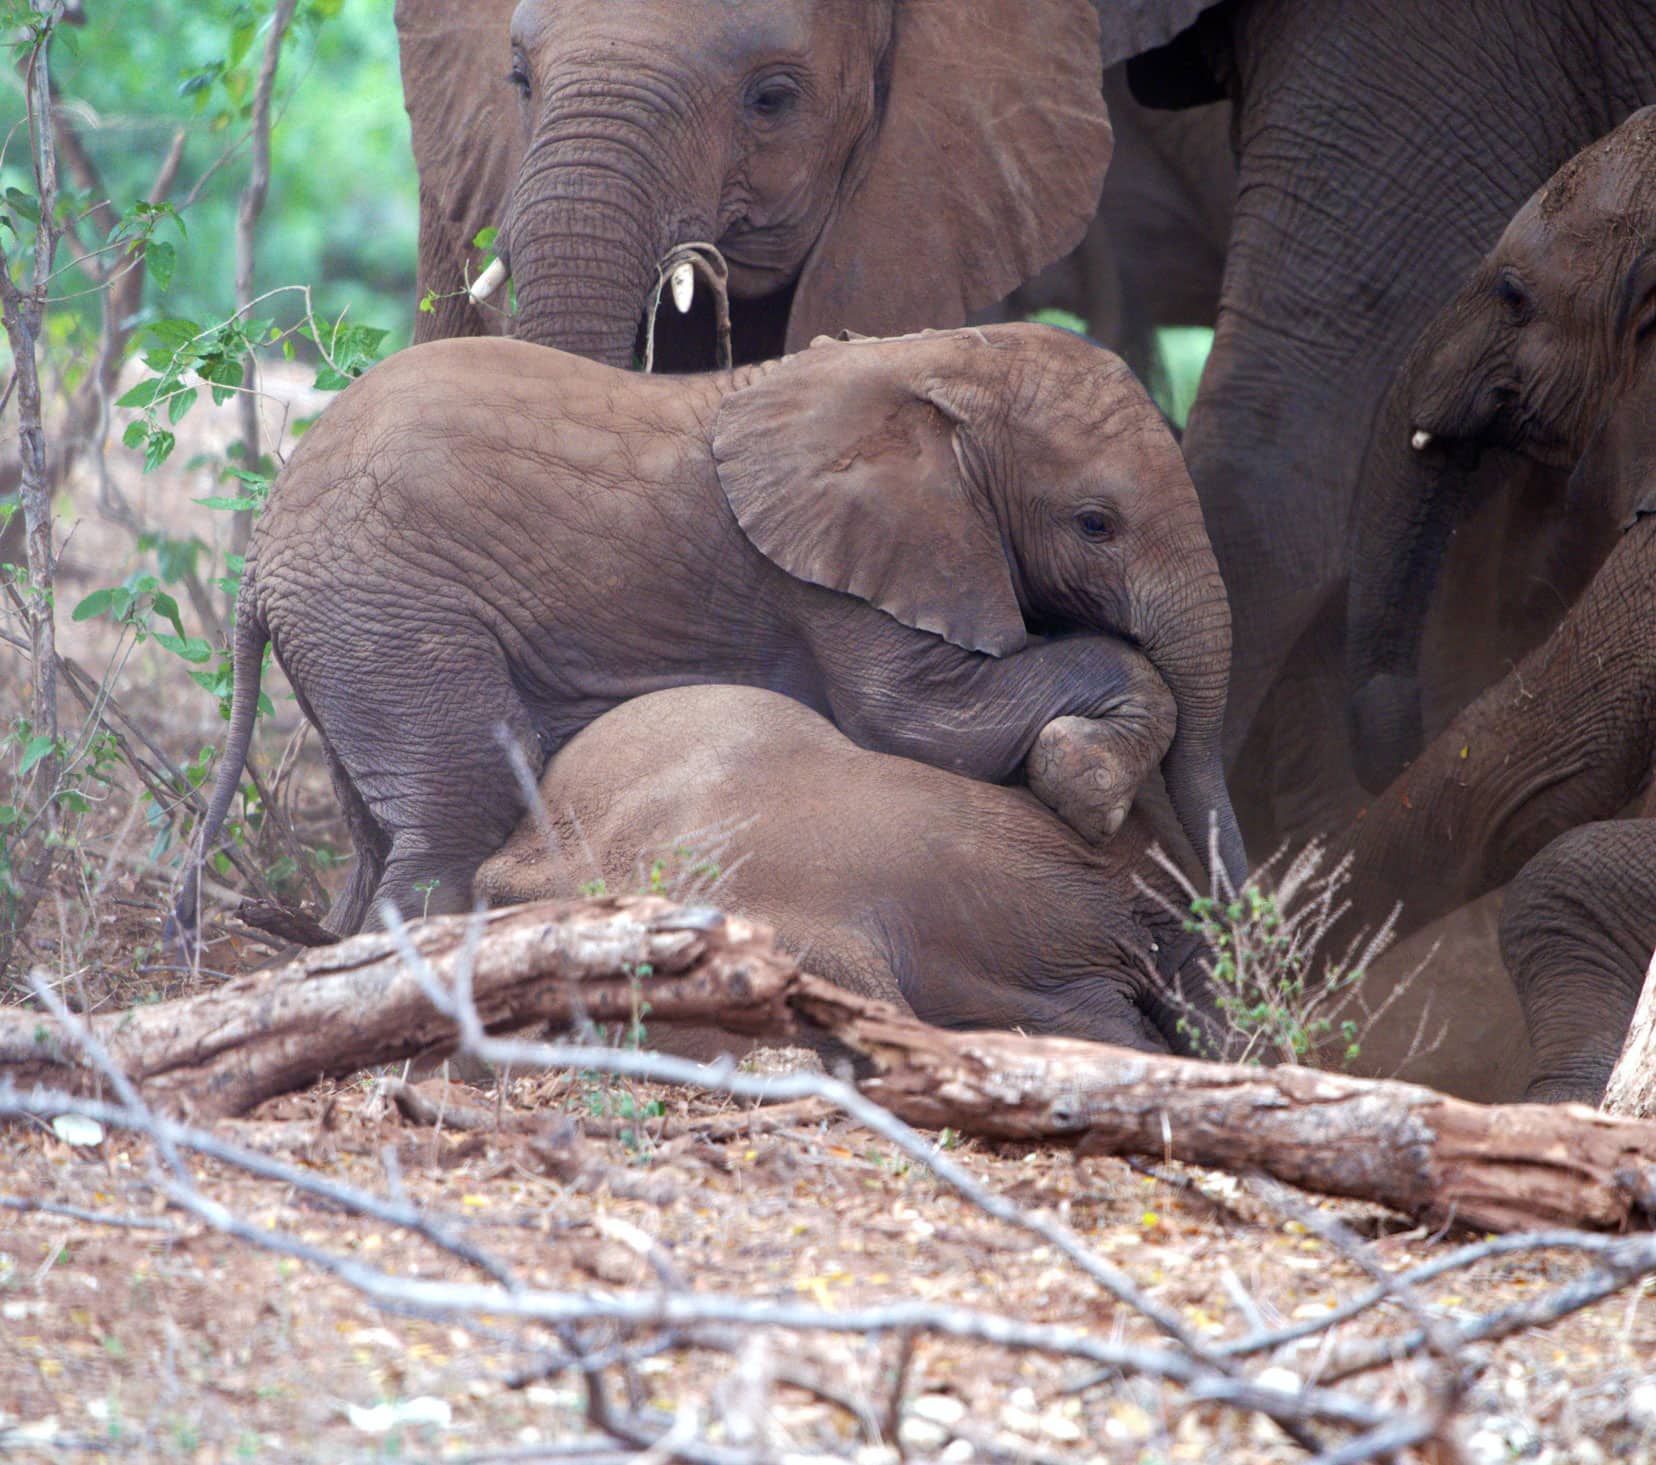 baby elephant clambering over another sleeping elephant